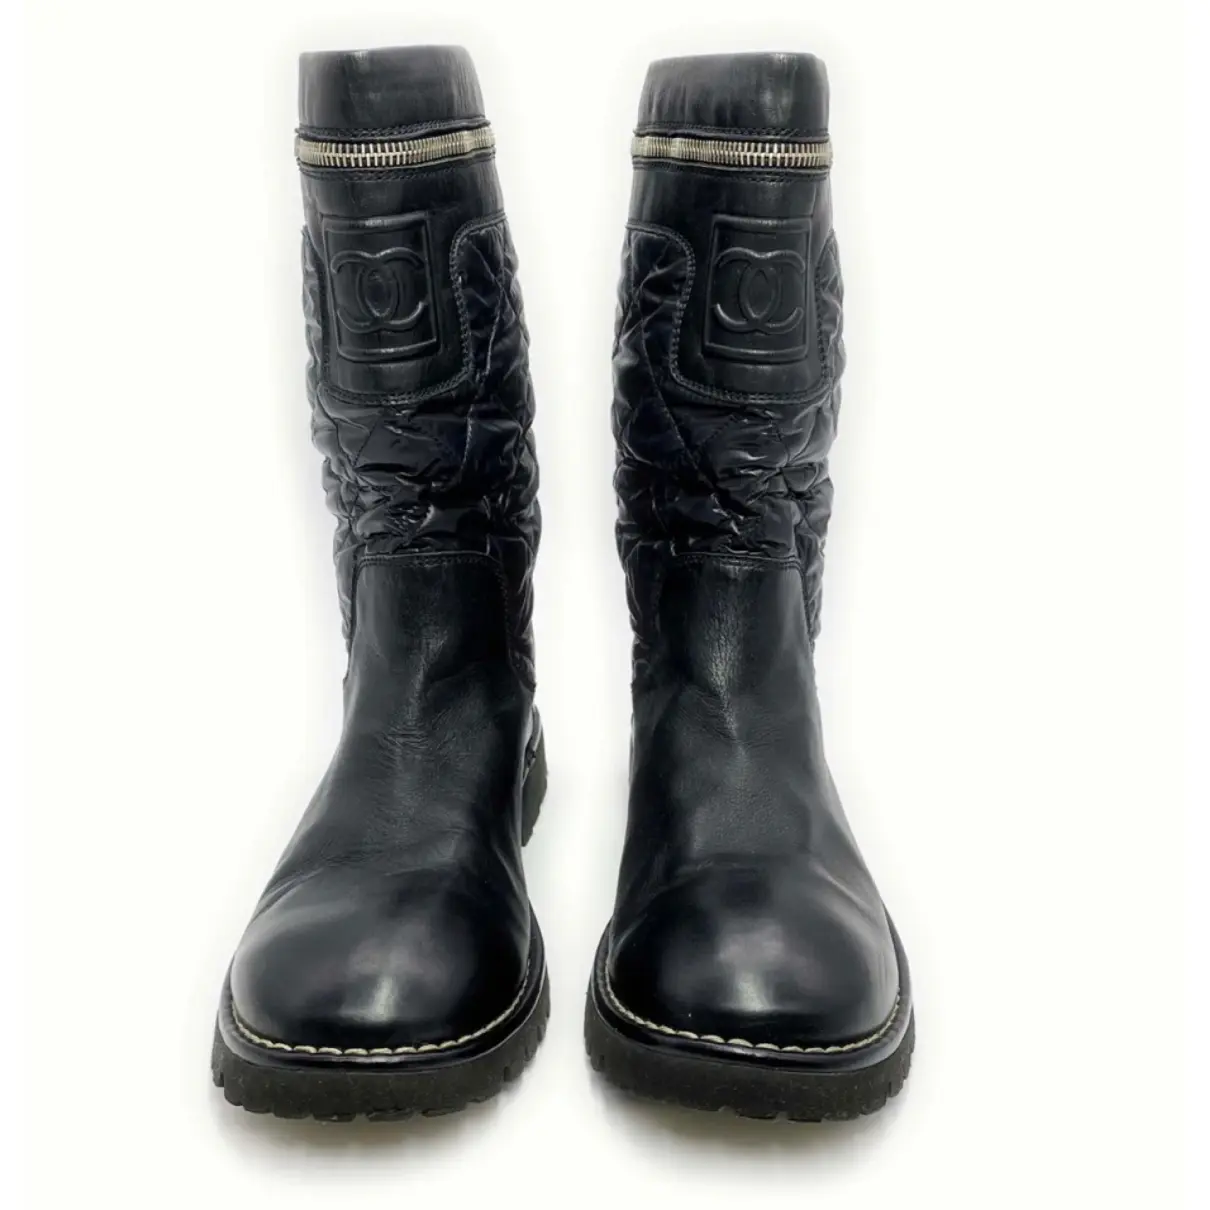 Buy Chanel Leather biker boots online